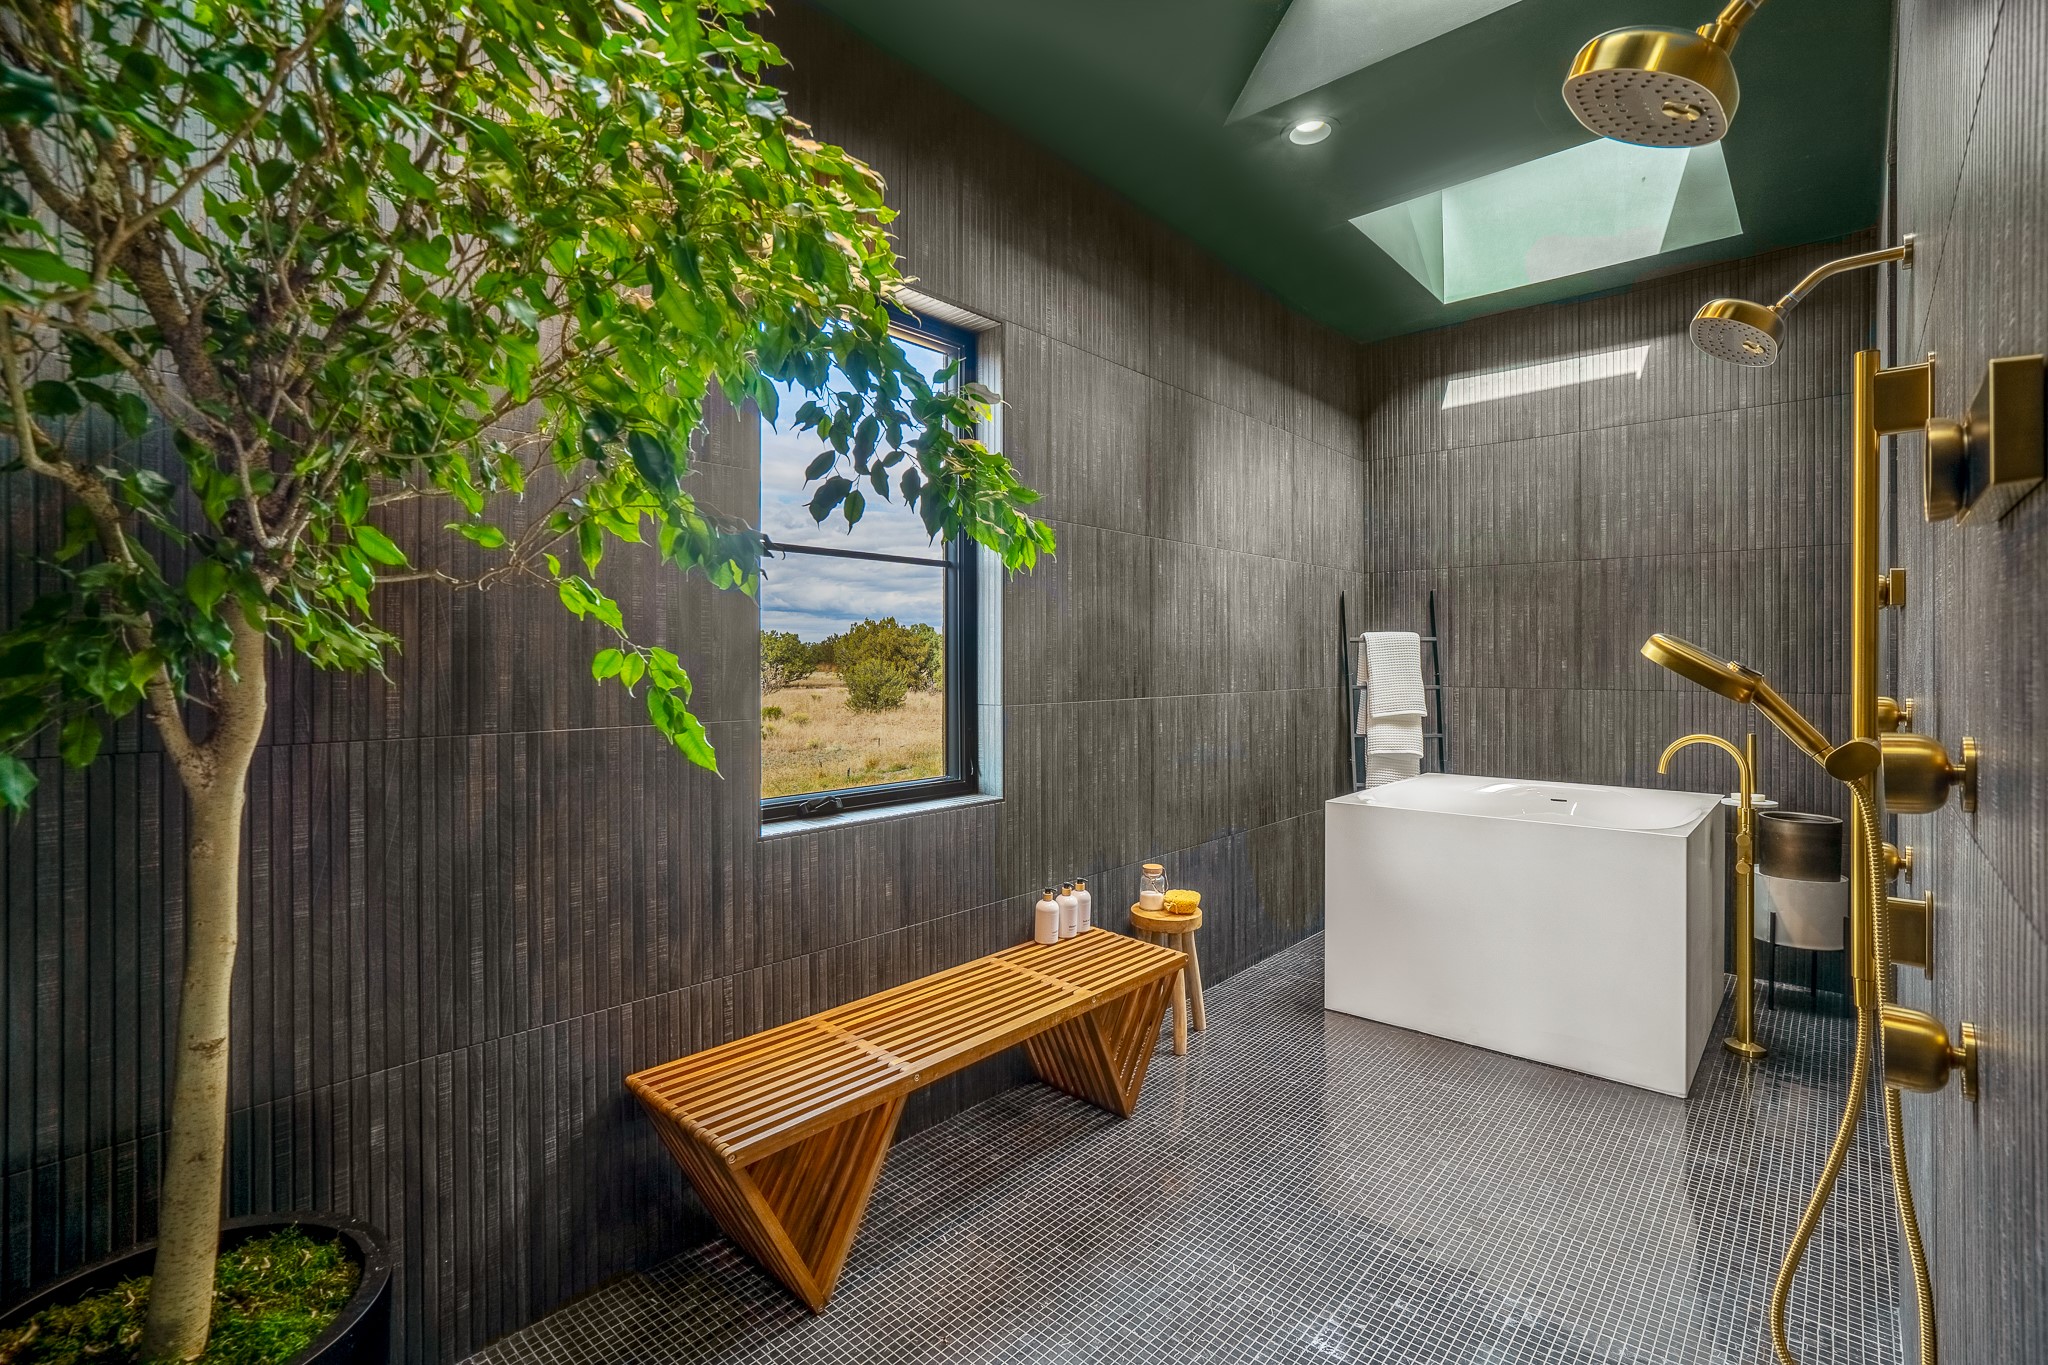 Wet room with programmable Anthem shower, Stillness soaking tub, skylights.